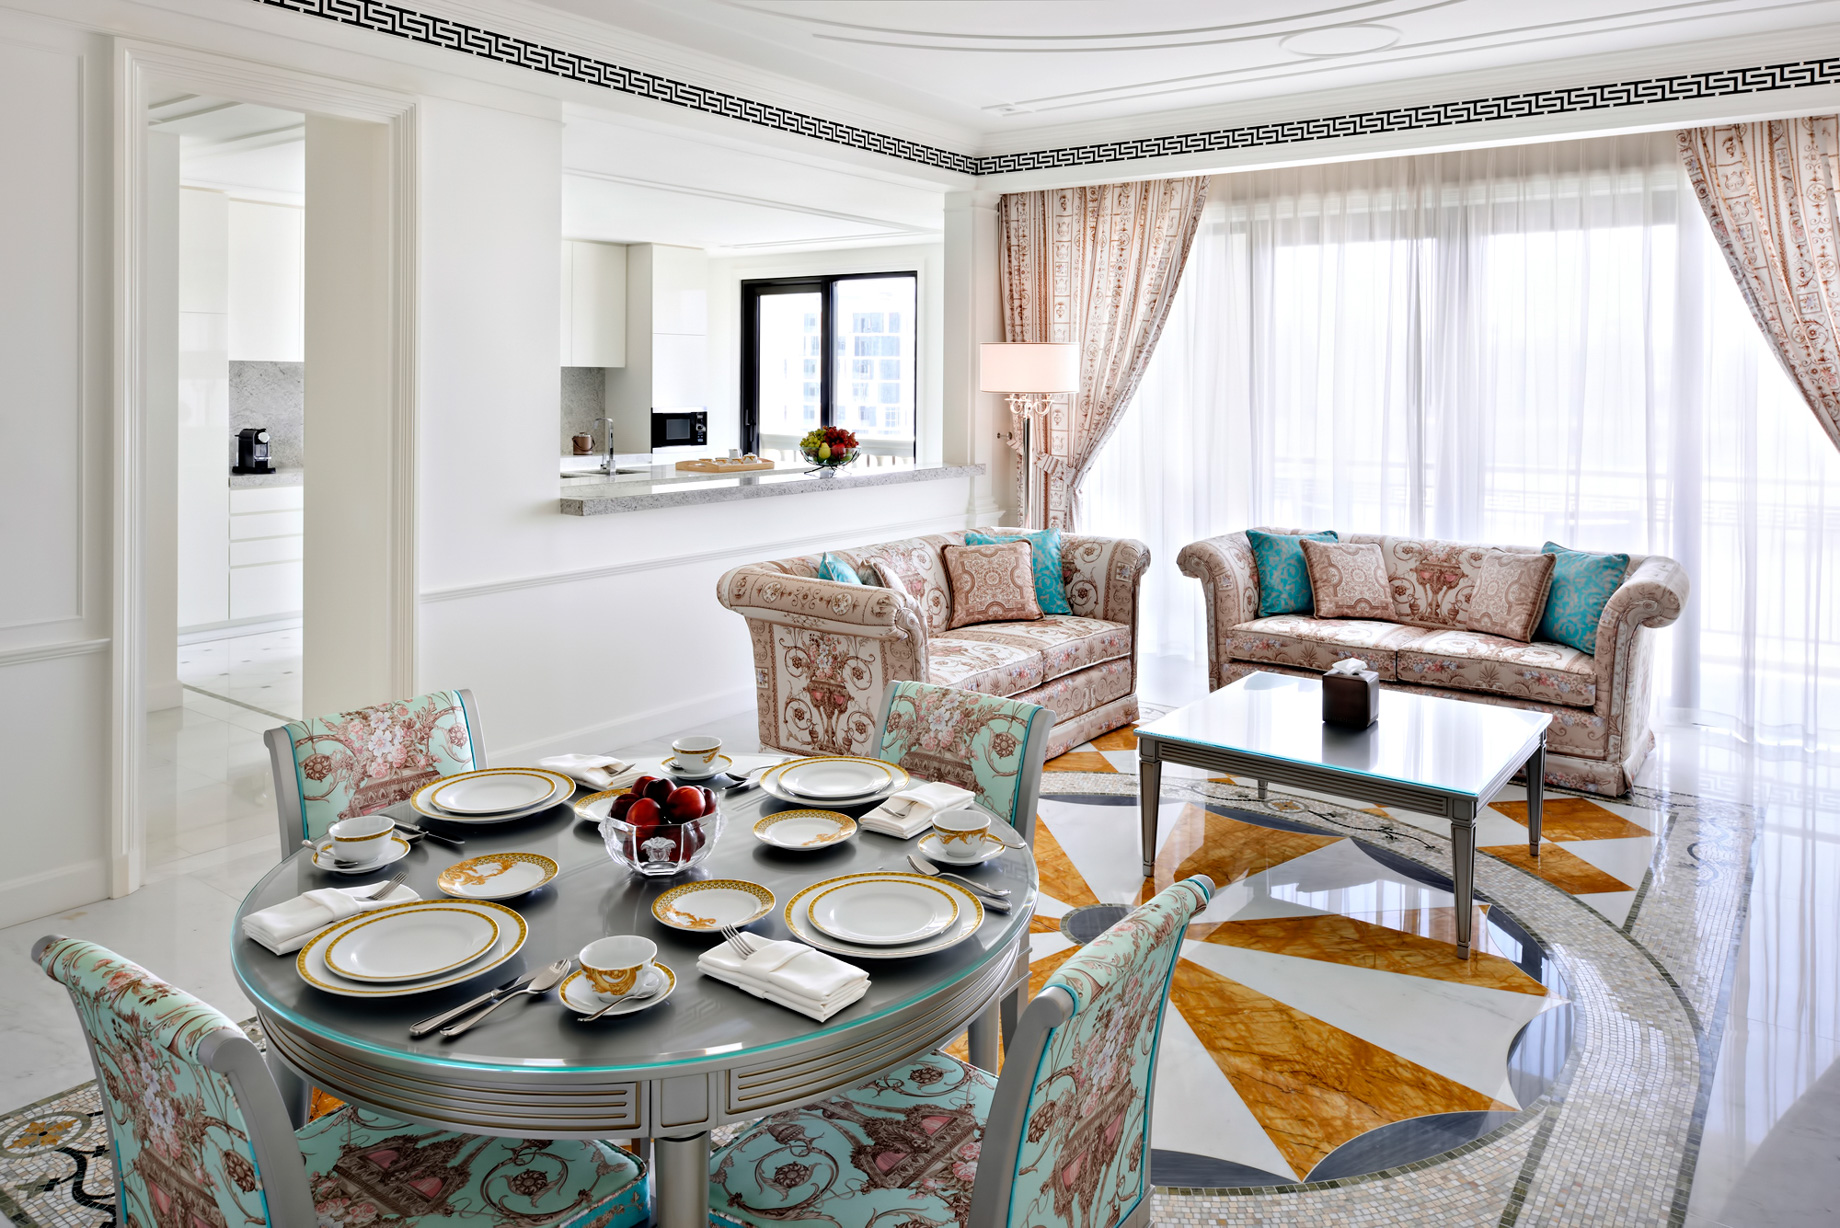 Palazzo Versace Dubai Hotel - Jaddaf Waterfront, Dubai, UAE - 4 Bedroom Residence Dining Area